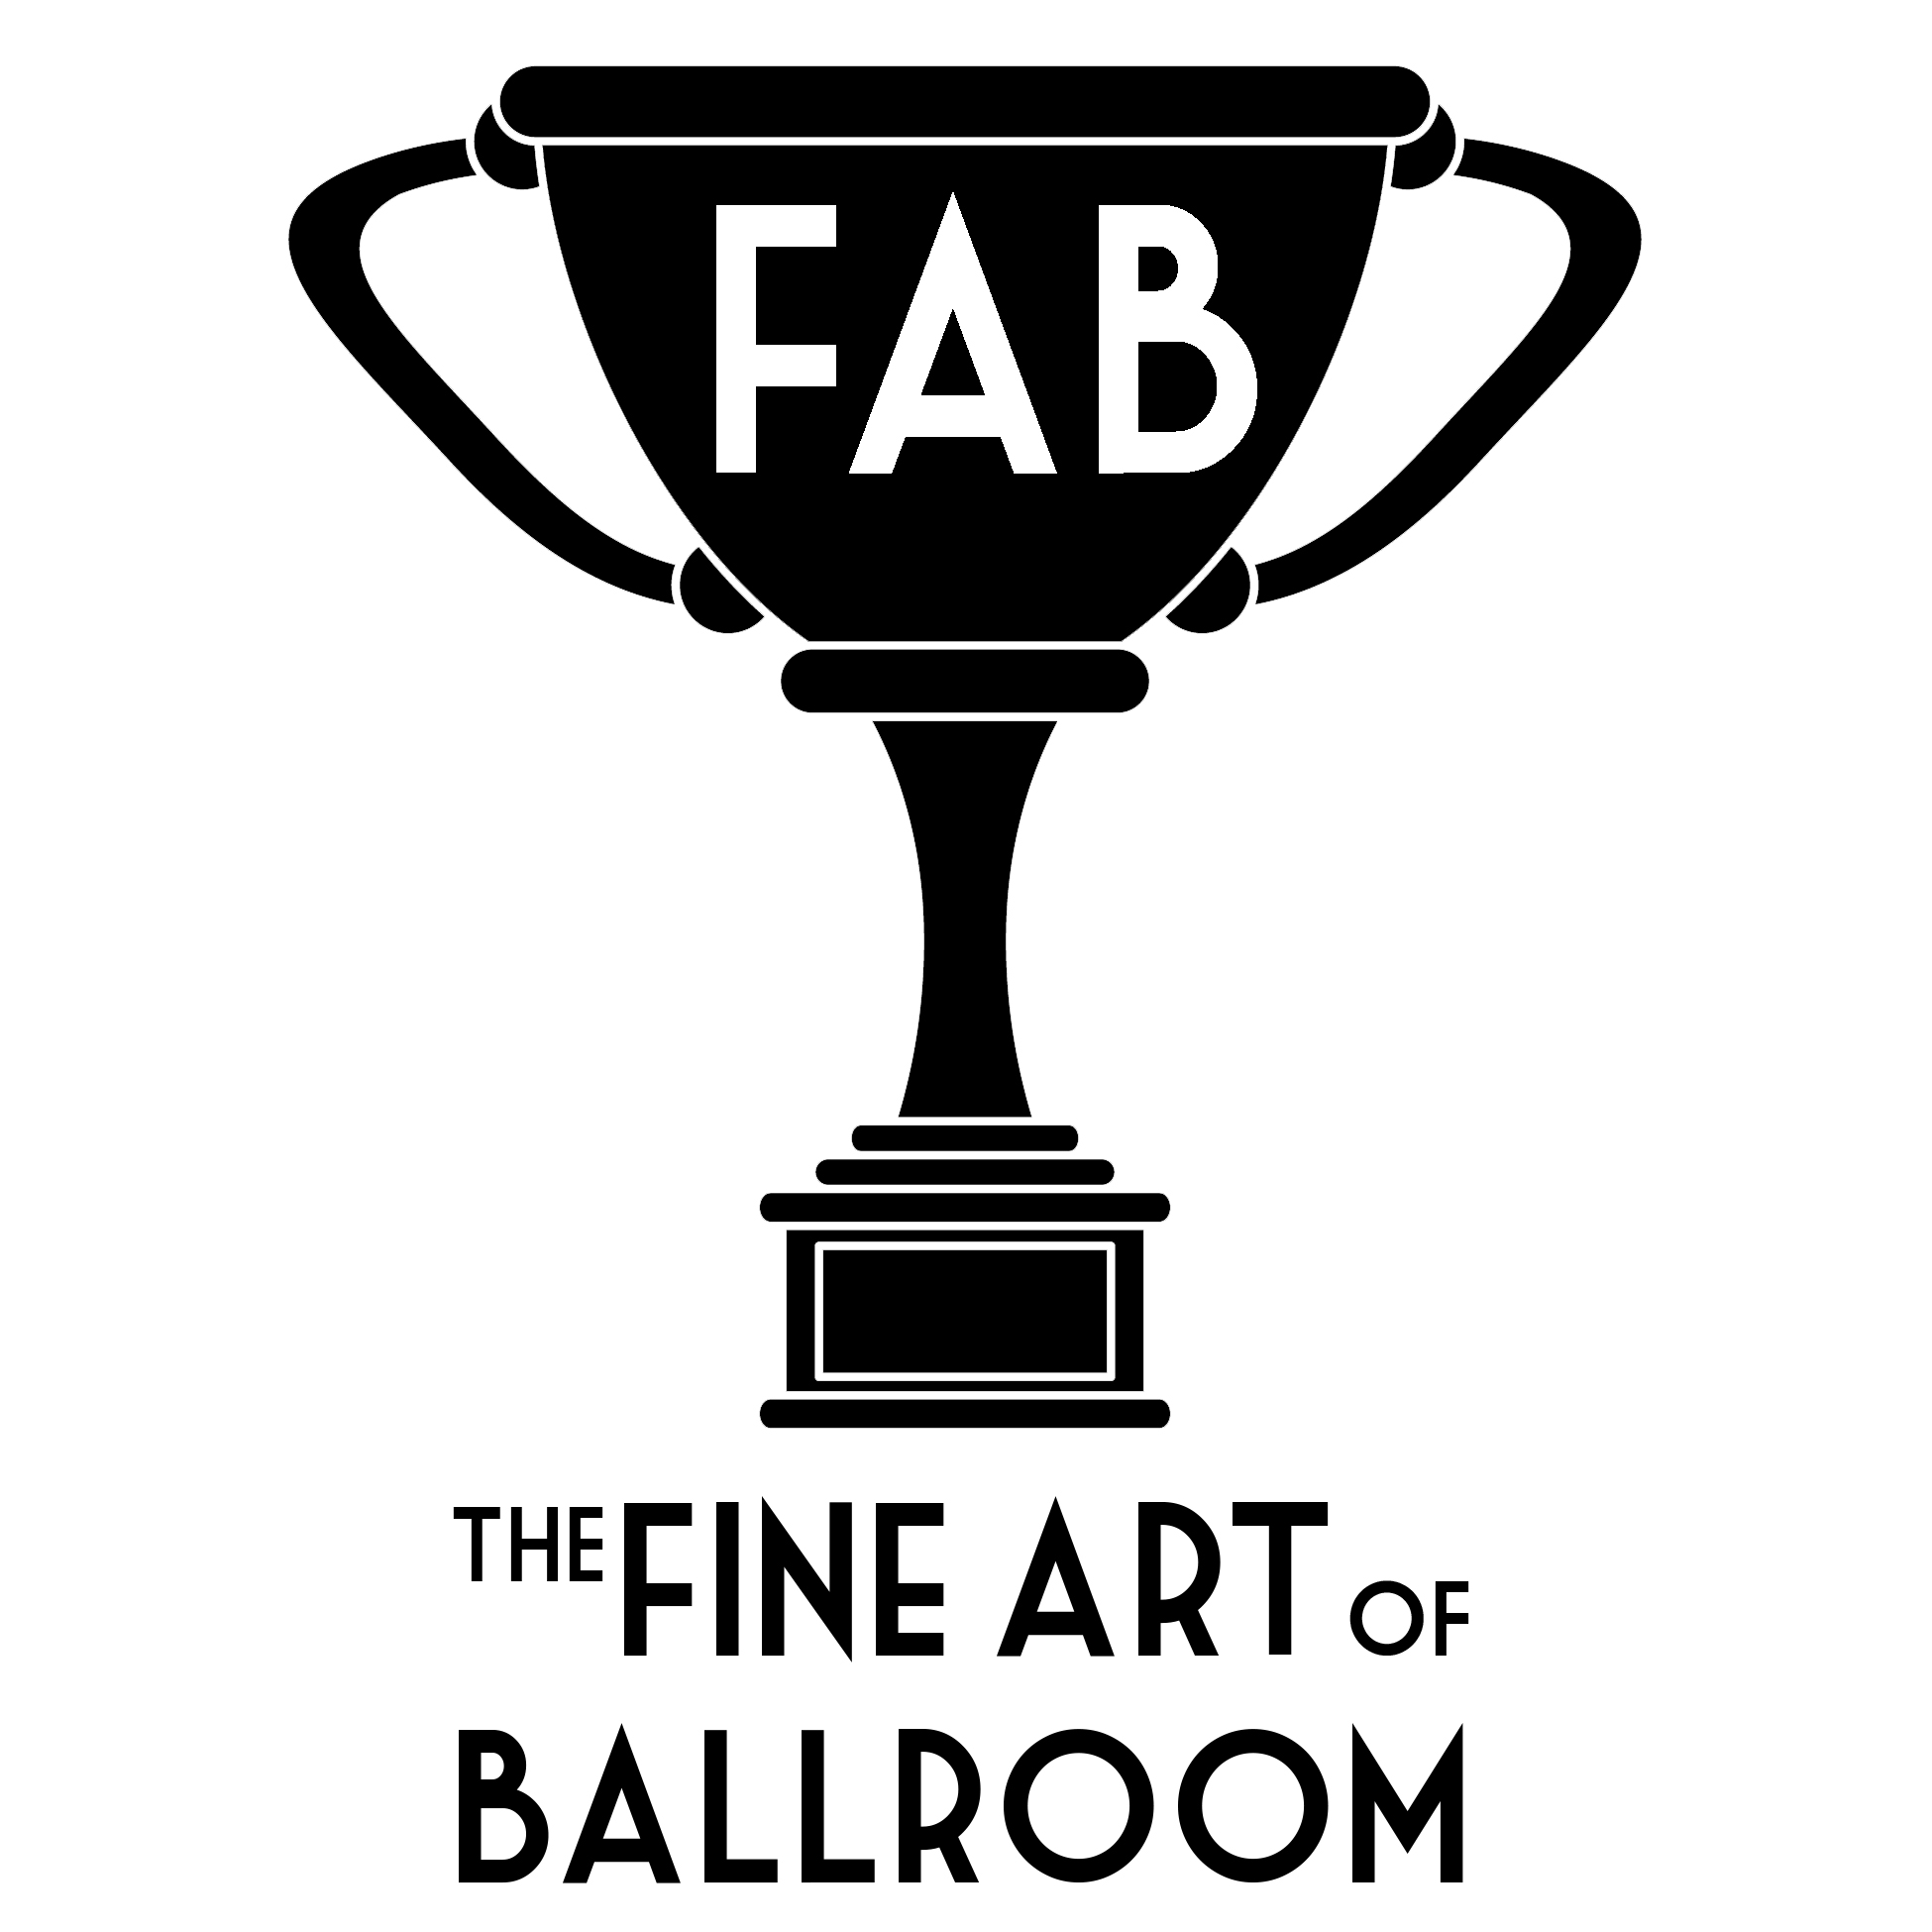 The Fine Art of Ballroom